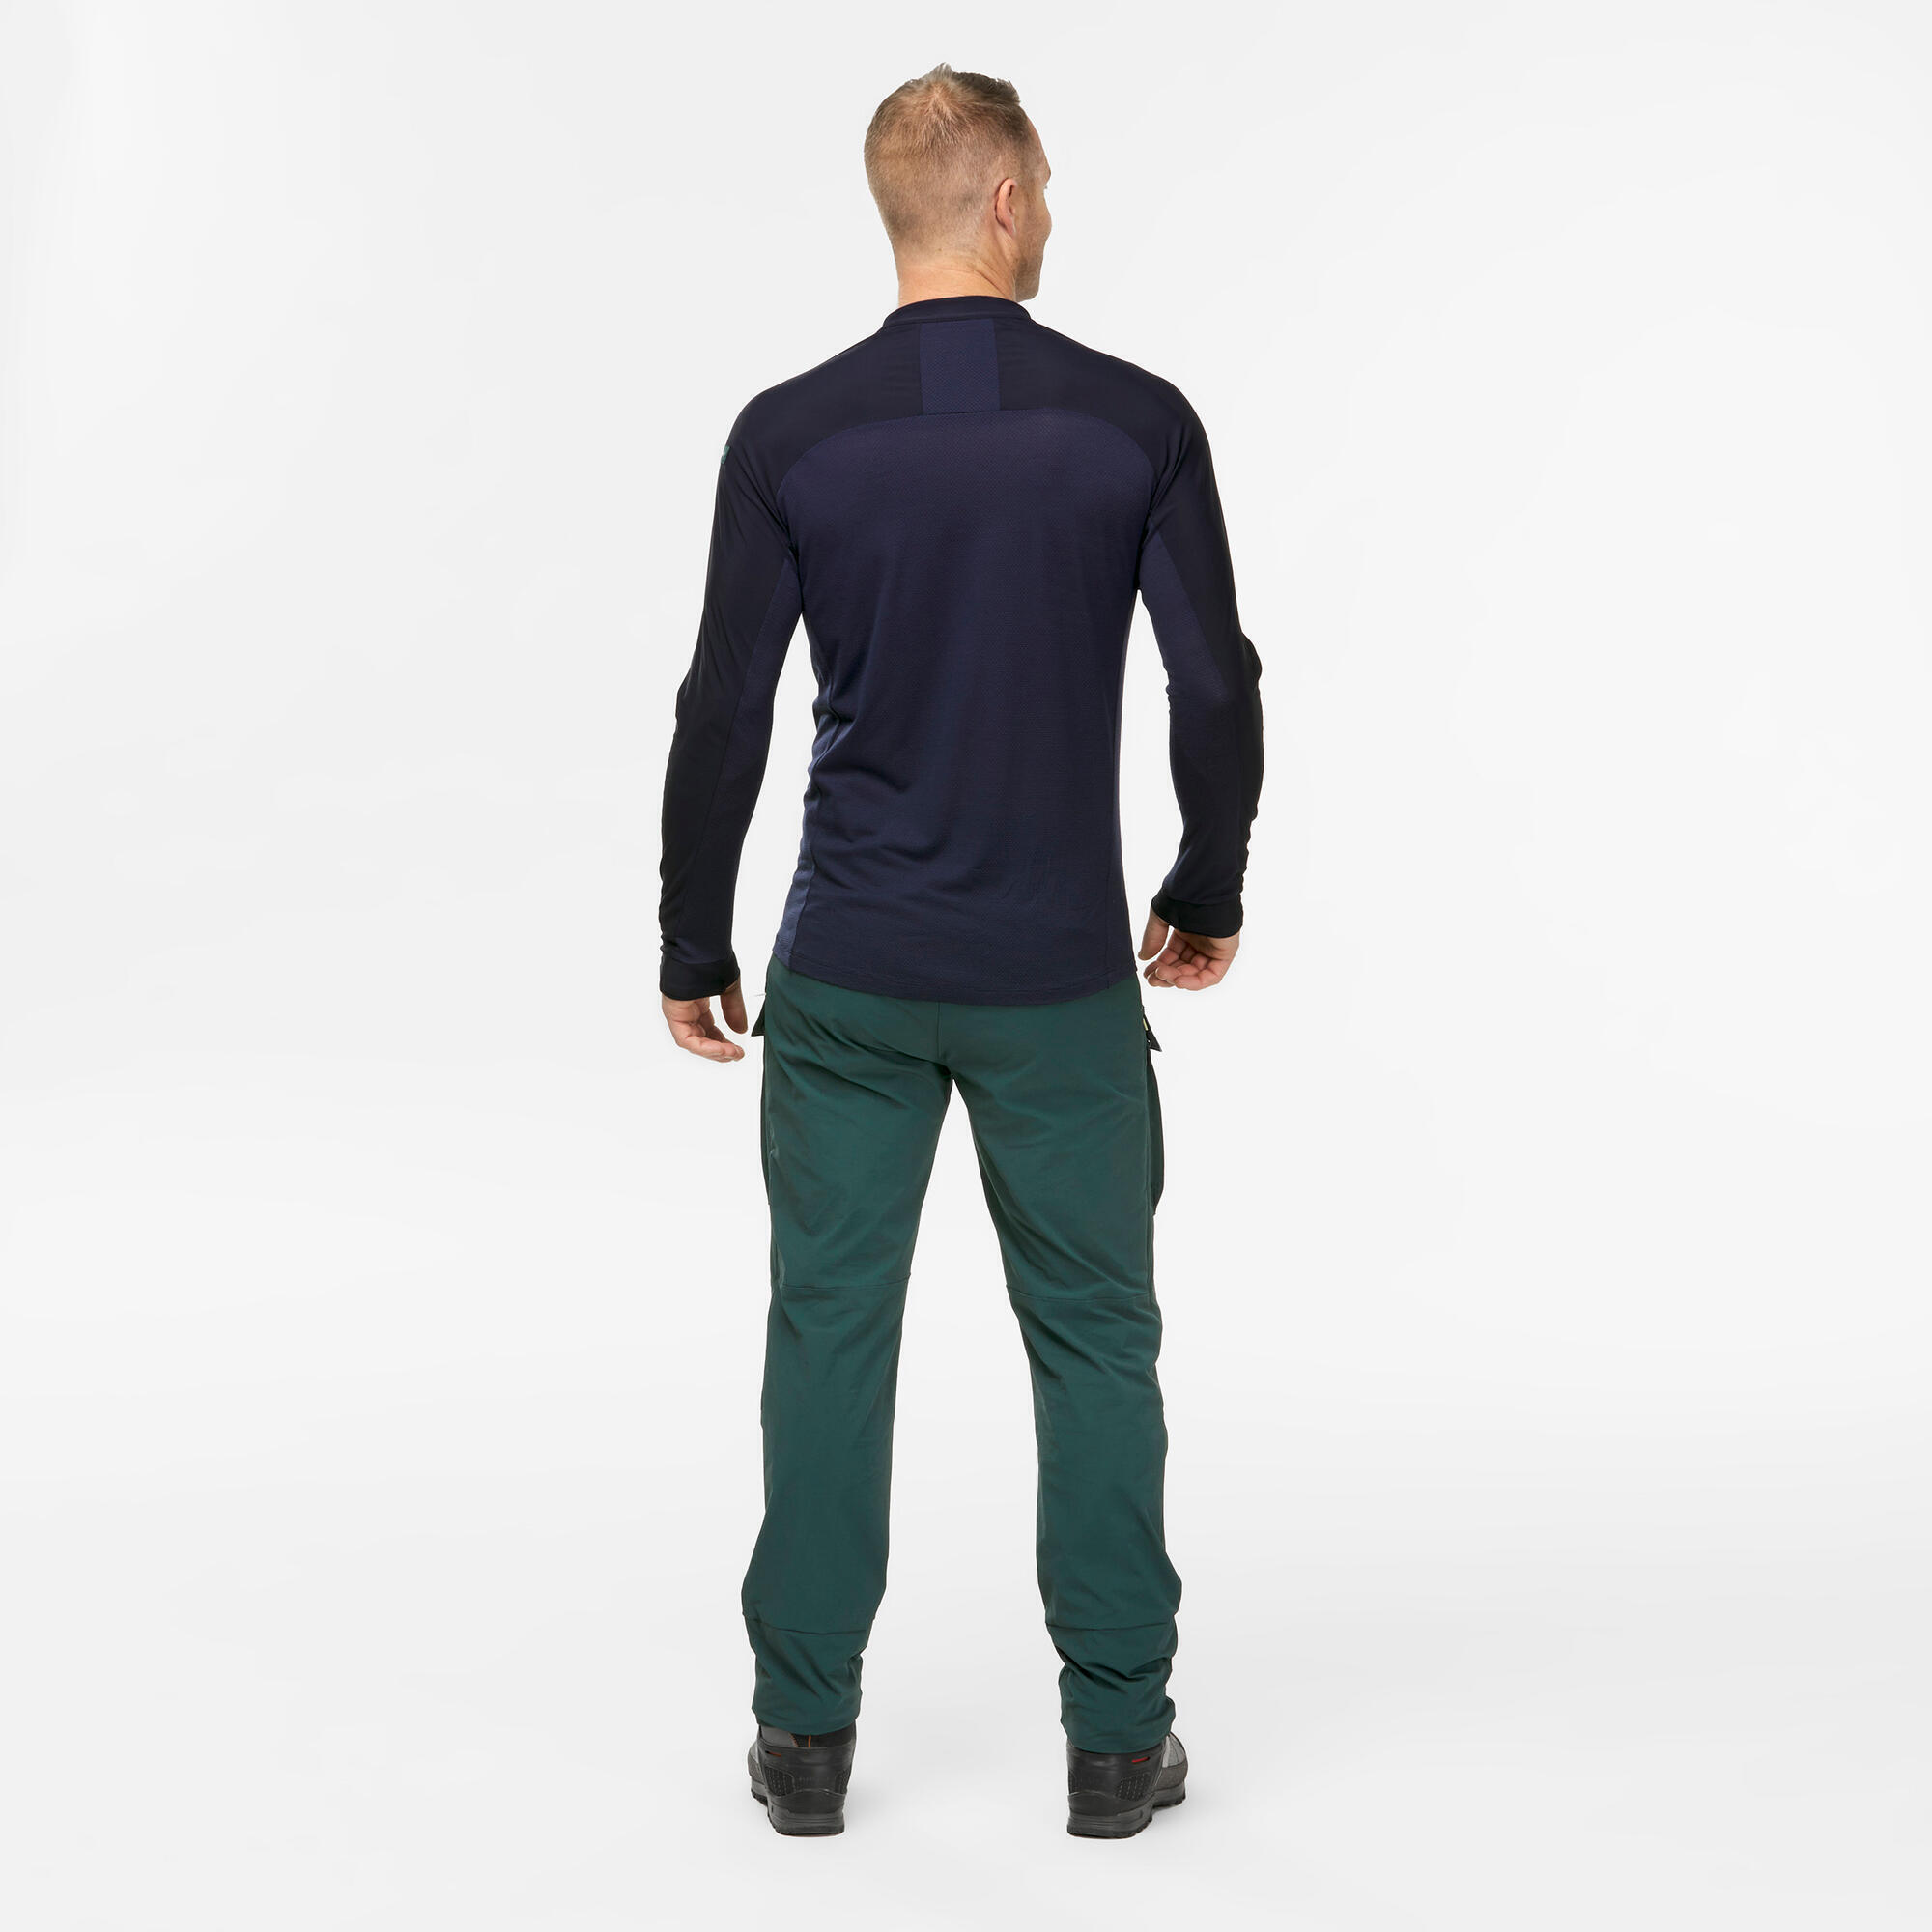 Men's Anti-mosquito Trousers - Tropic 900 - green 11/11